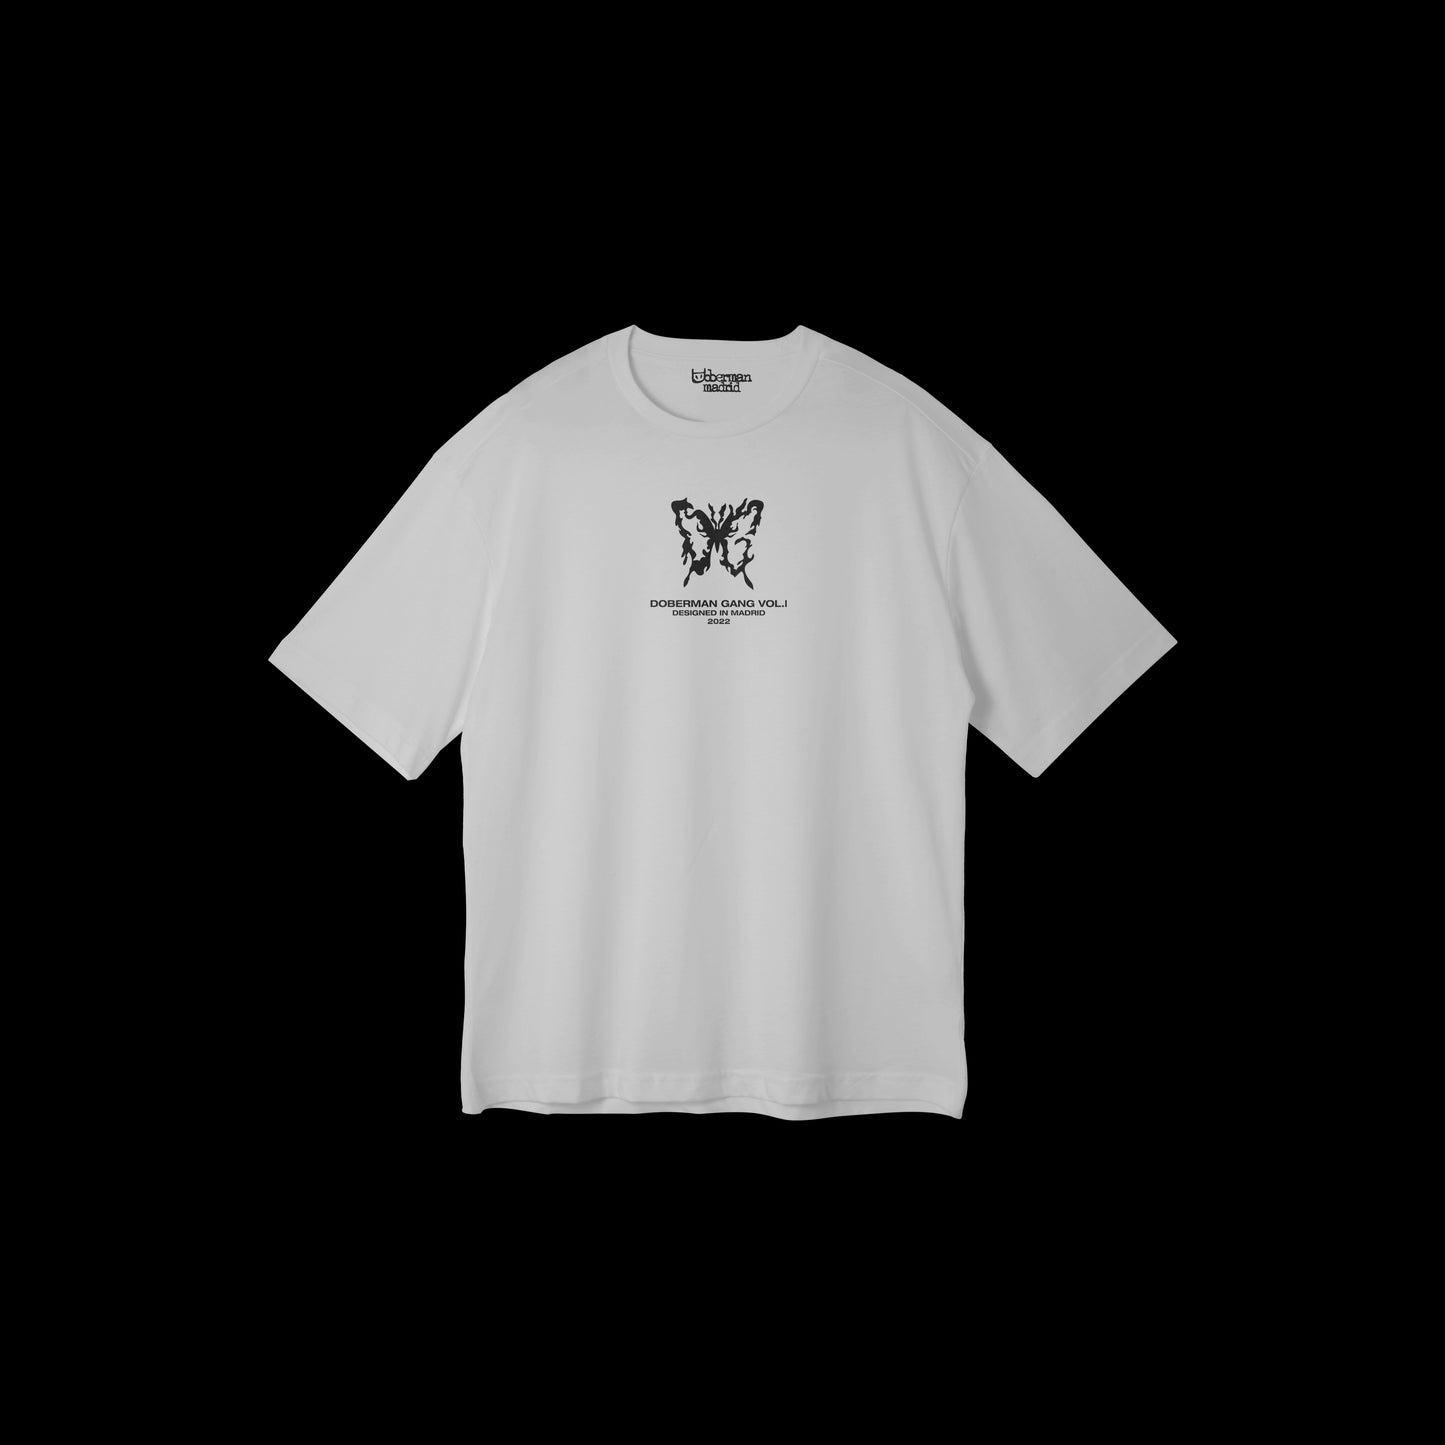 Camiseta Tee Blanca Doberman Madrid Doberman Gang Vol.I